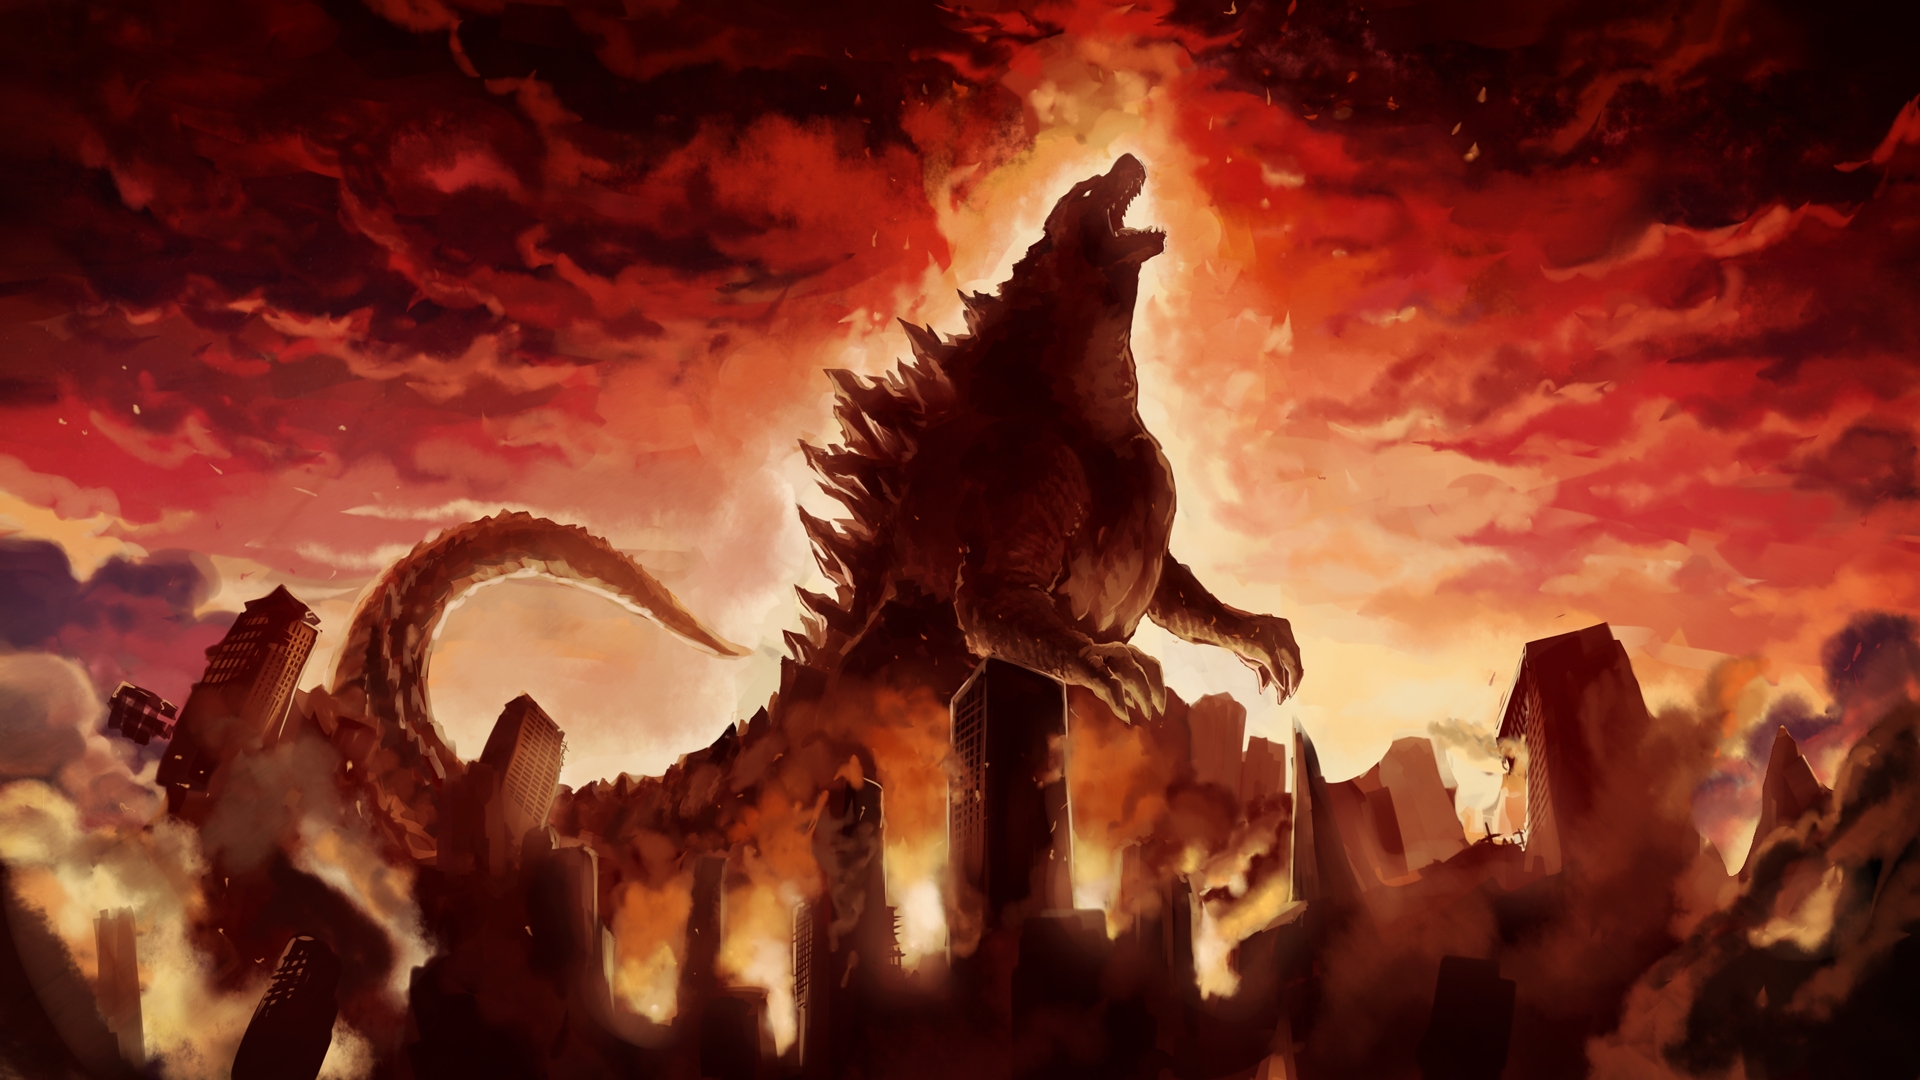 A Shin Godzilla wallpaper I made for fun  rGODZILLA